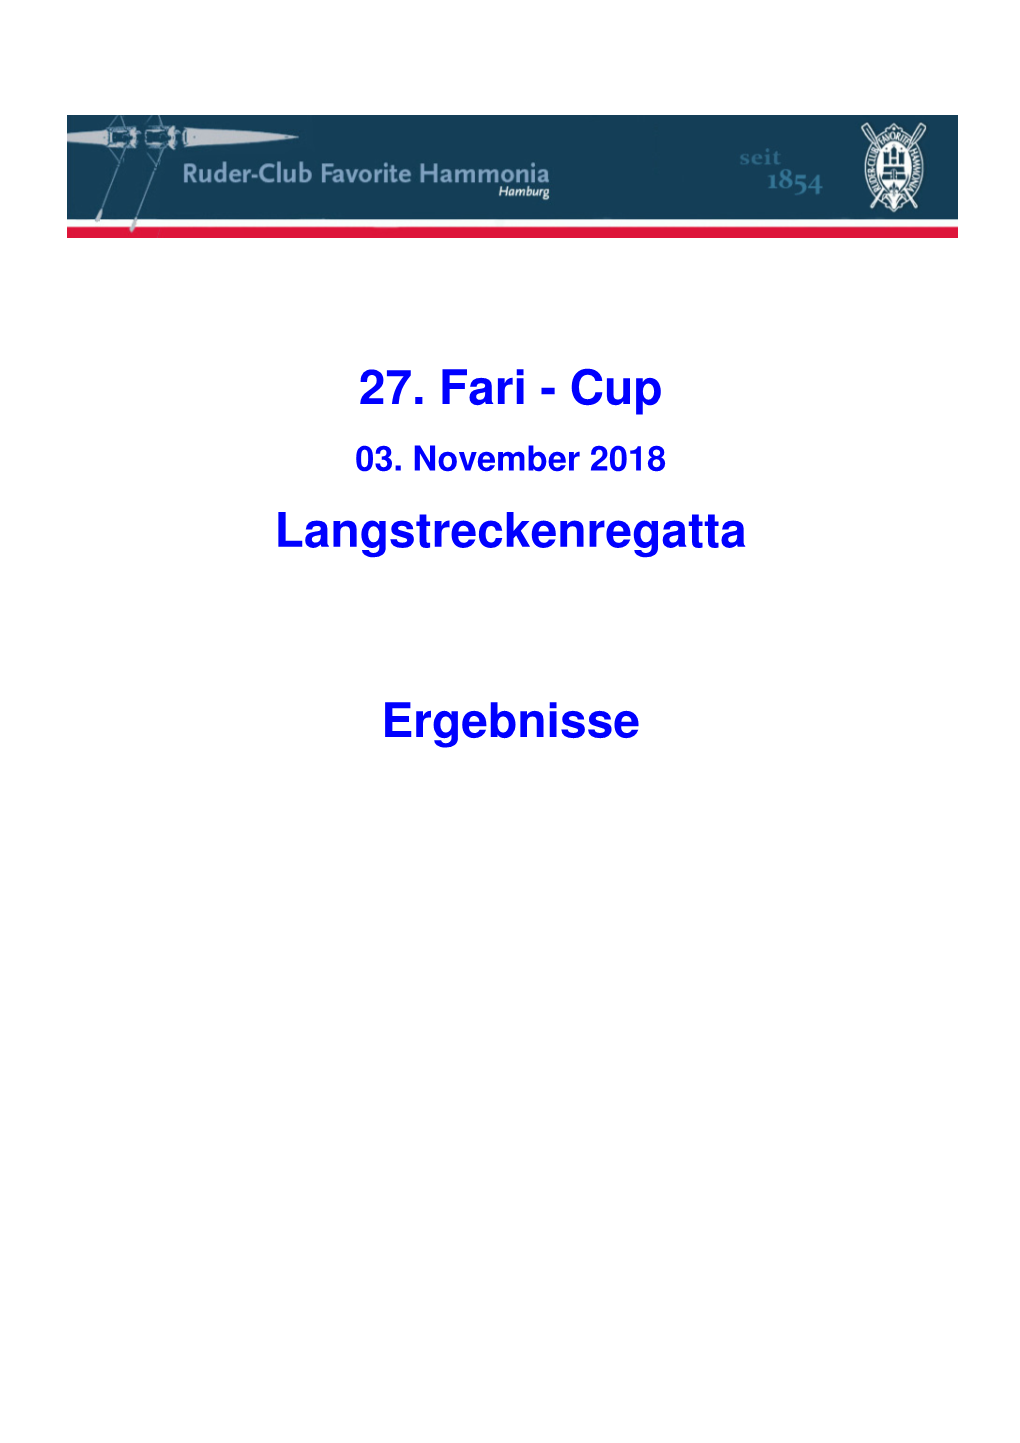 27. Fari - Cup 03